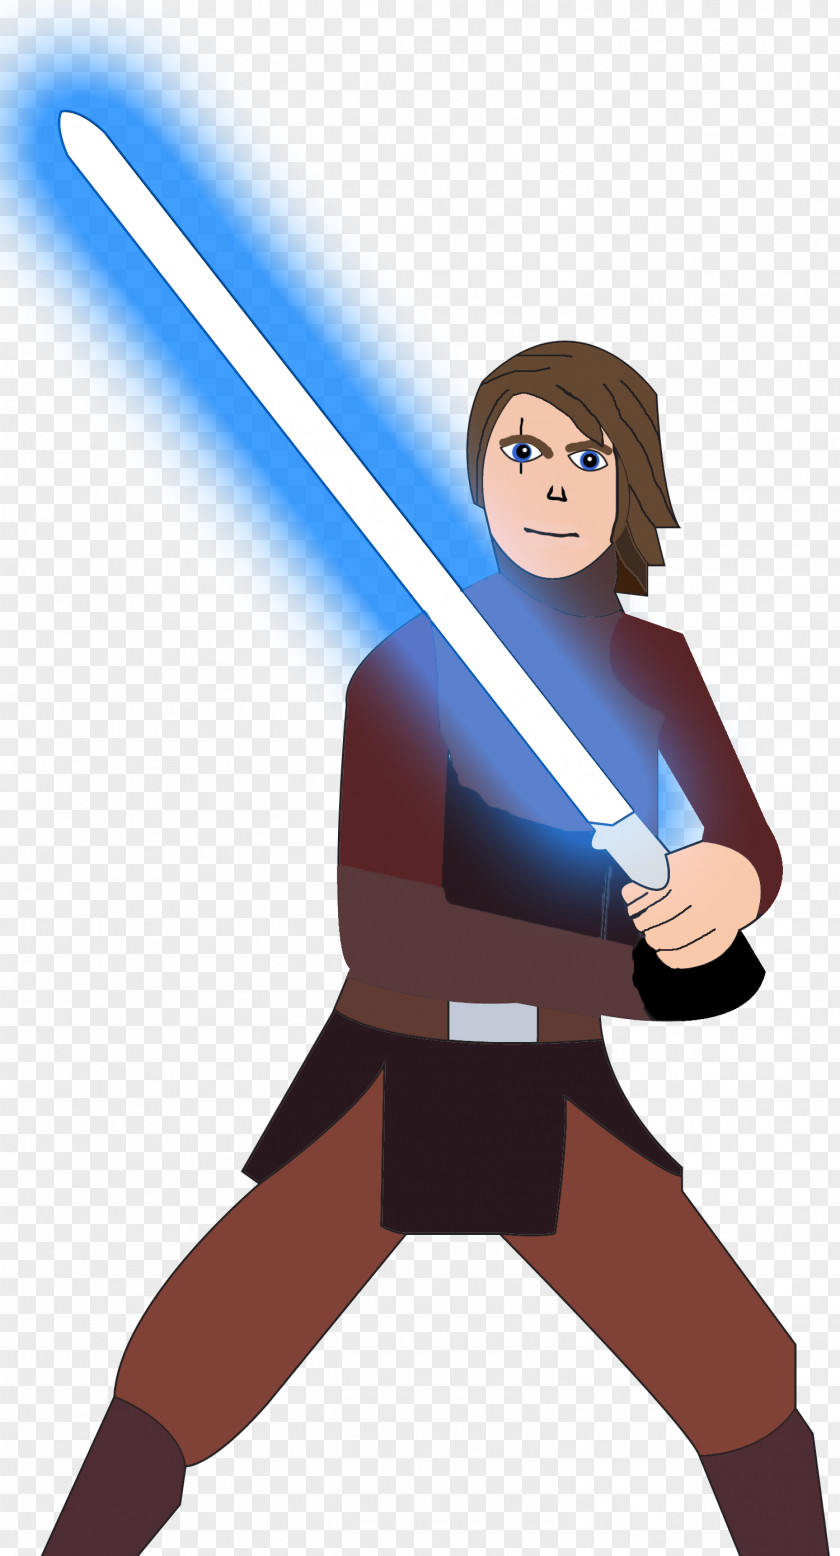 Antraceno Background Darth Vader Luke Skywalker Obi-Wan Kenobi Rey Star Wars Rebels PNG